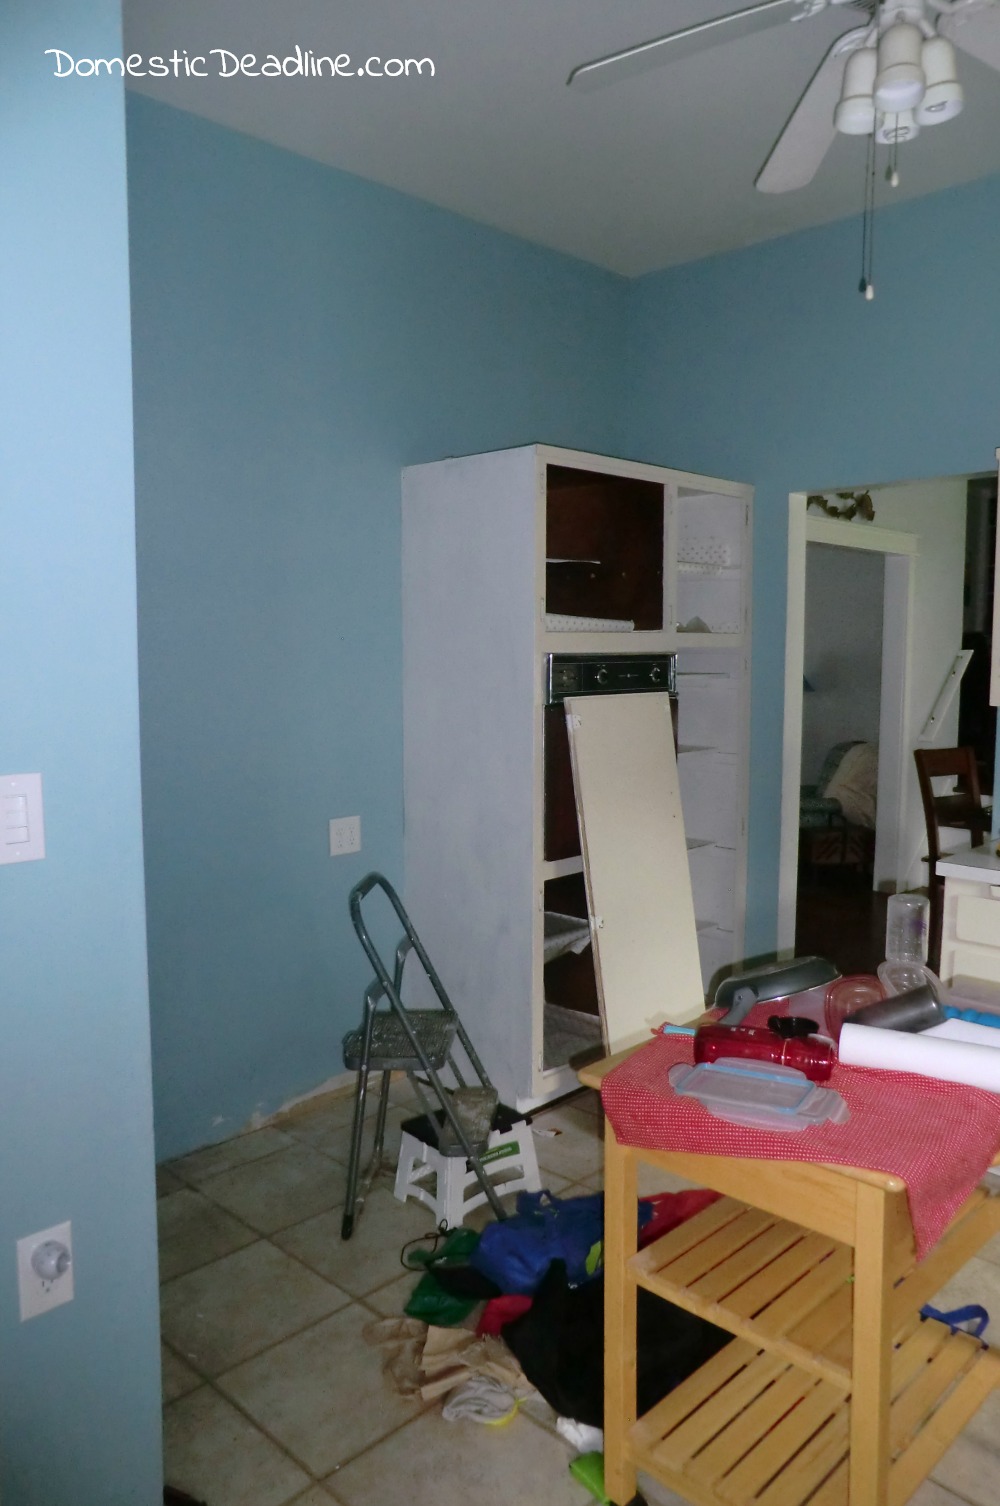 Kitchen Renovation #DemoDay Renovation Realities Domestic Deadline